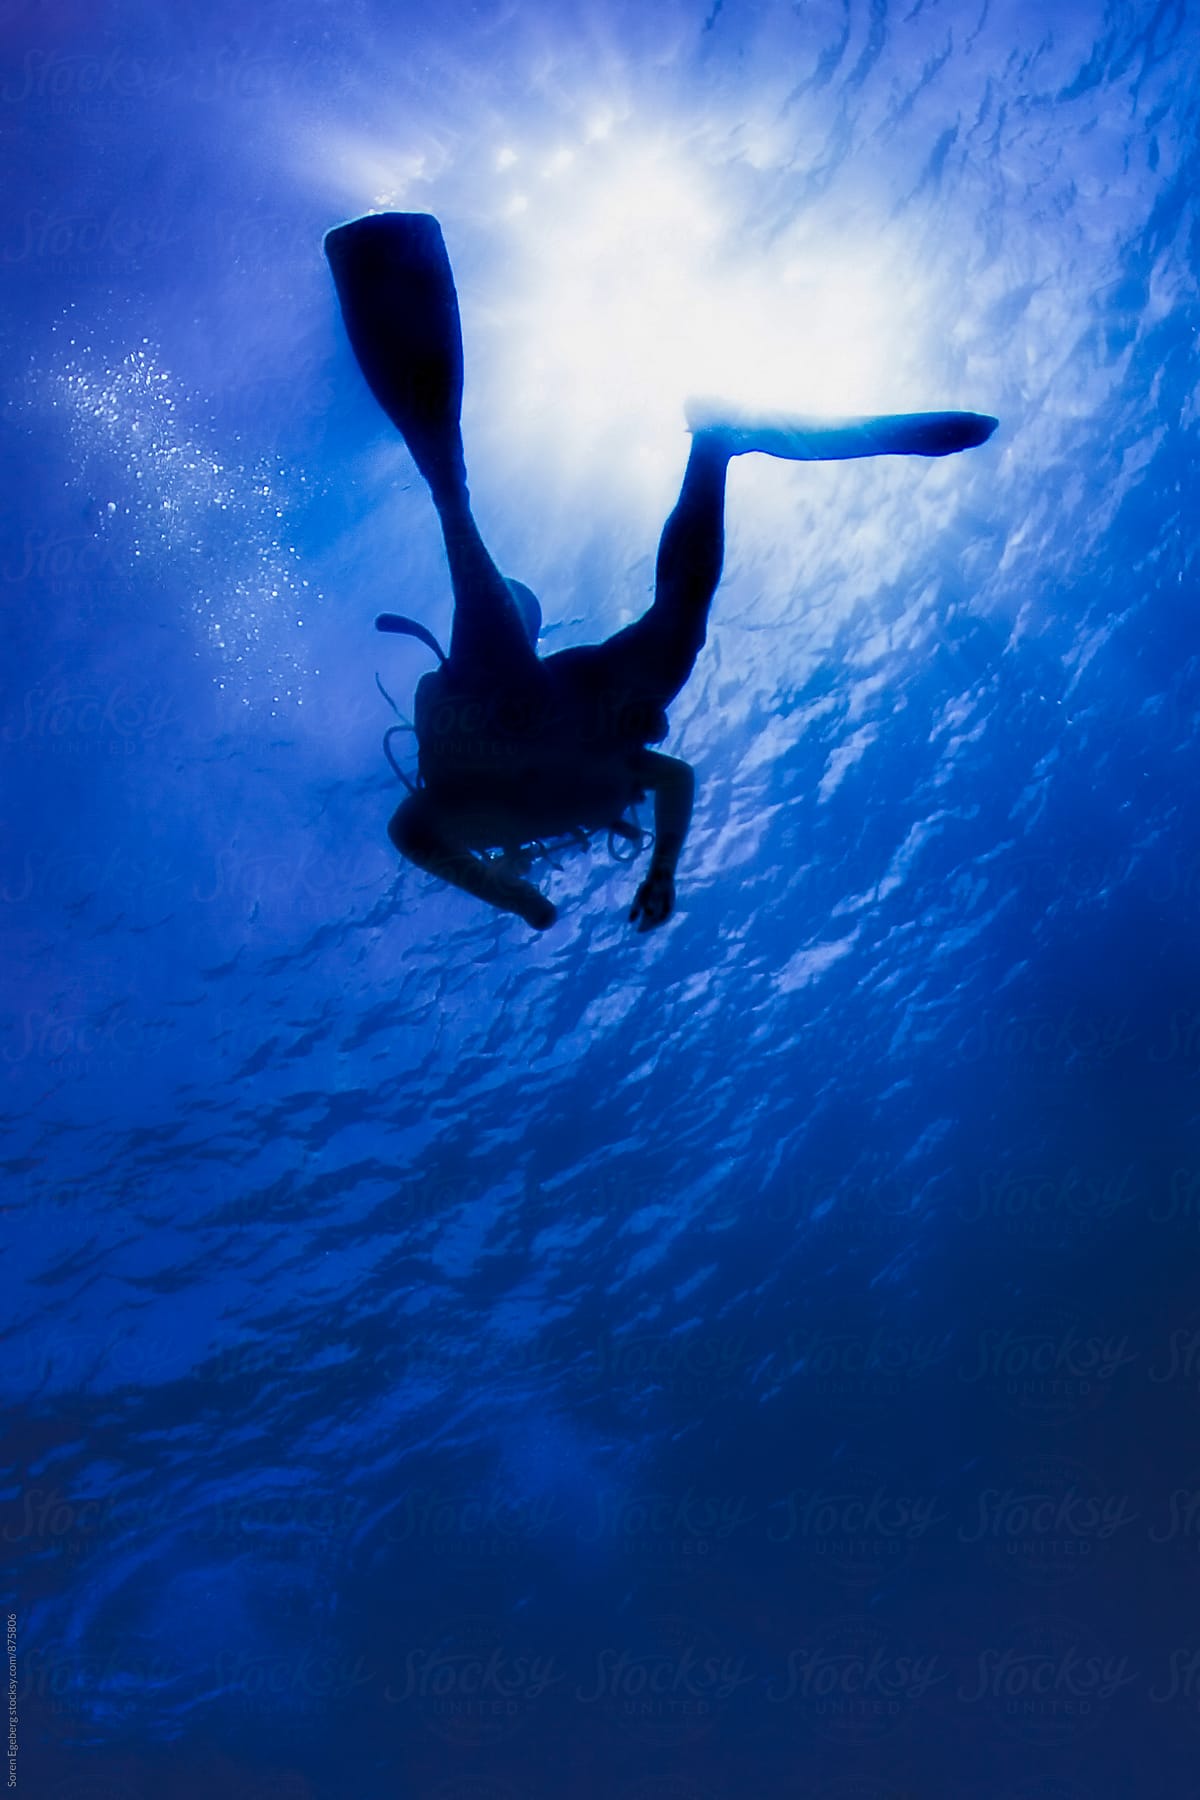 Scuba diver in silhouette swimming under water